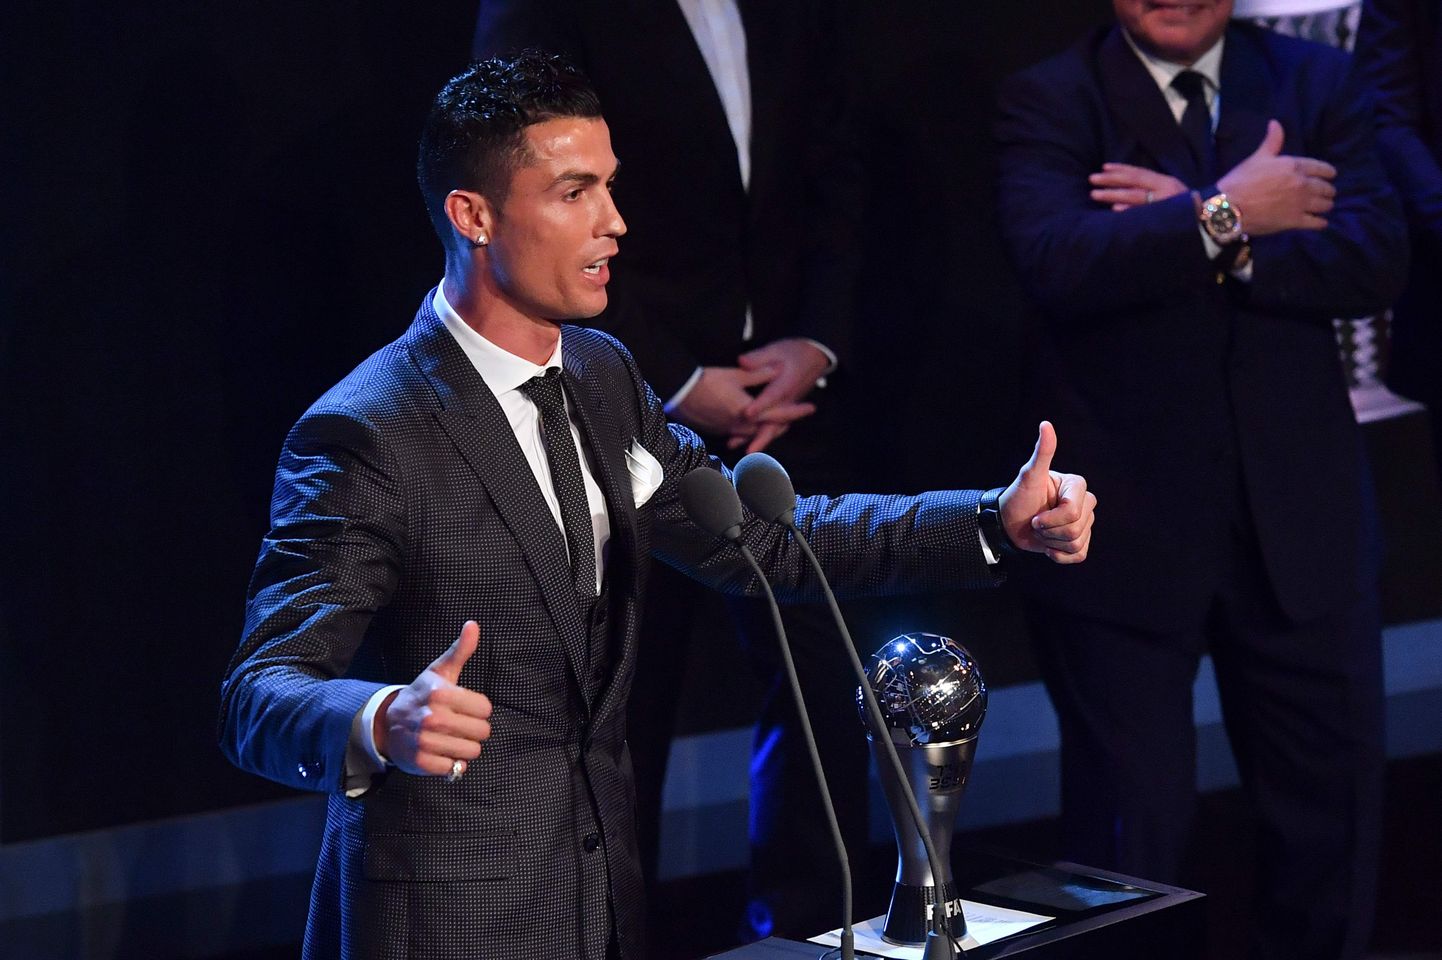 FIFA aasta parim jalgpallur on Cristiano Ronaldo.